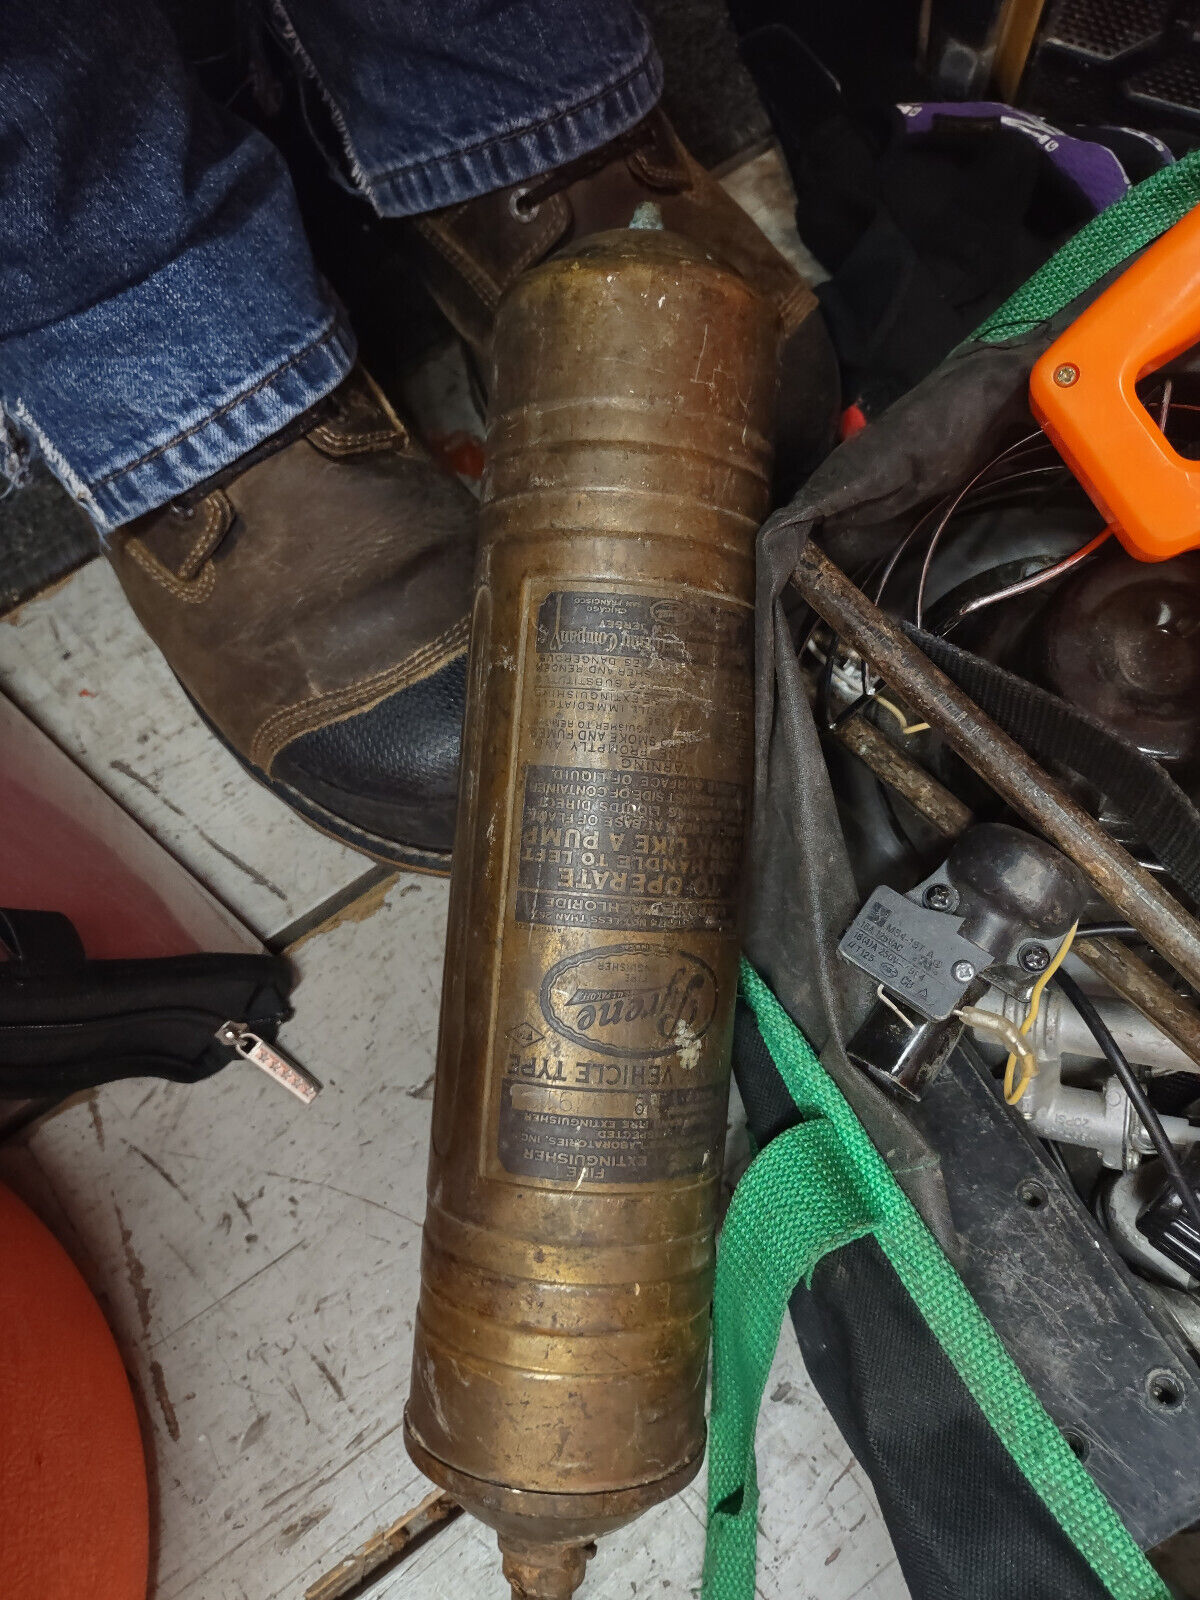 Antique Vintage Pyrene Brass Fire Extinguisher 1 qt W/Wall Mount Empty